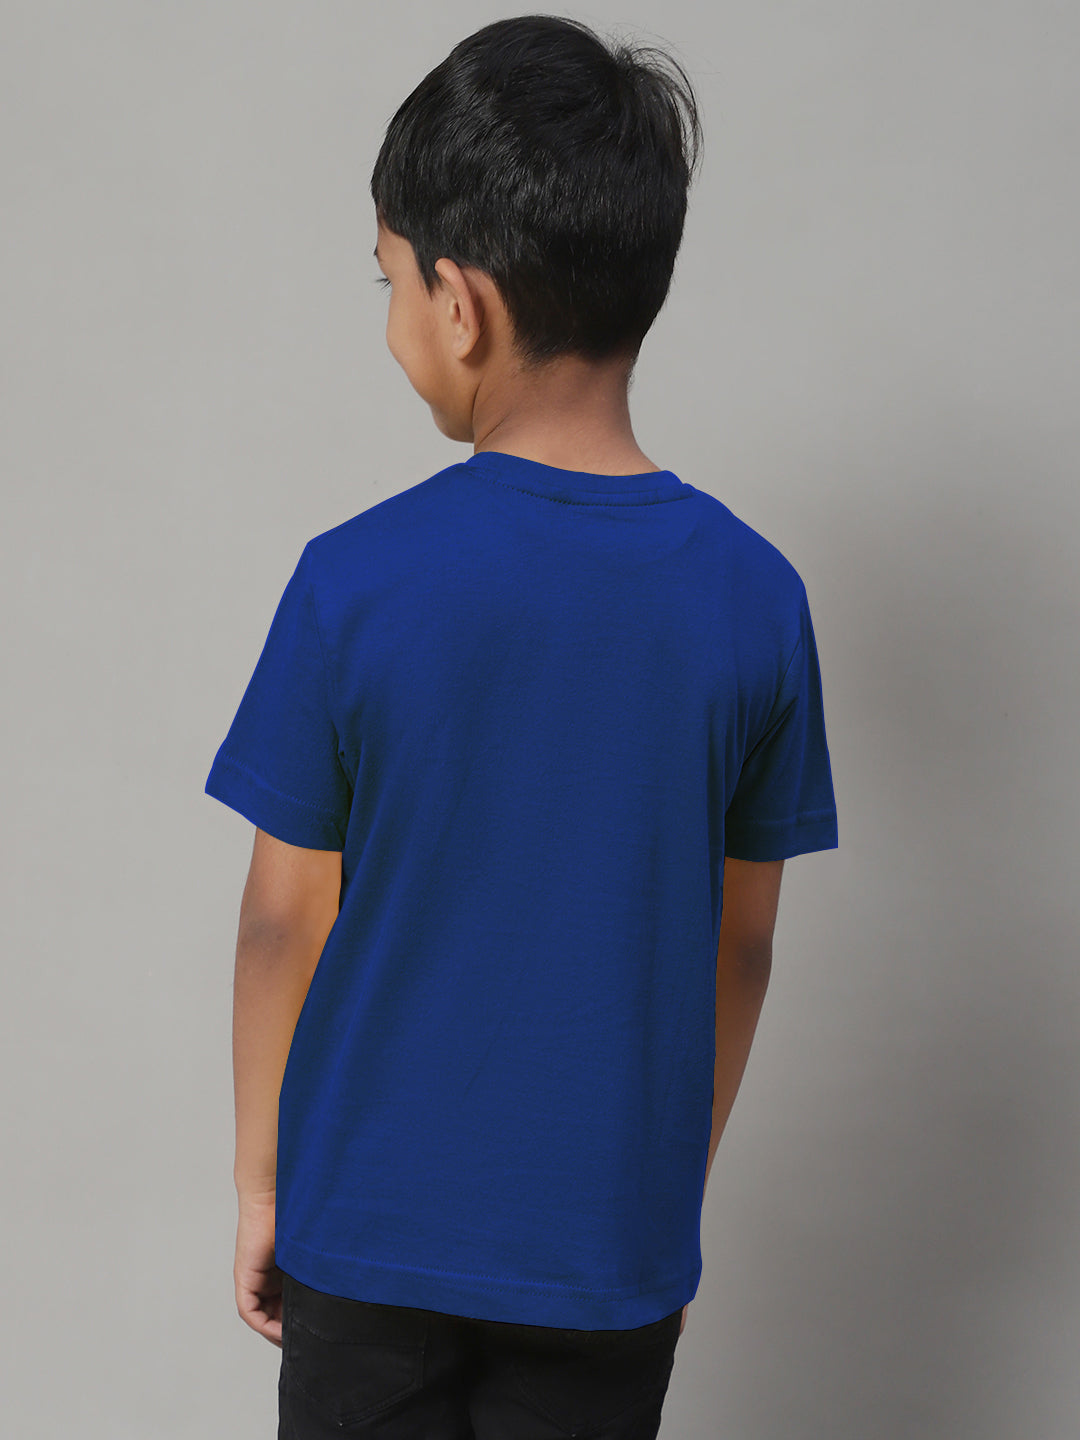 Boys Good Vibes Half Sleeves Printed T-Shirt - Friskers